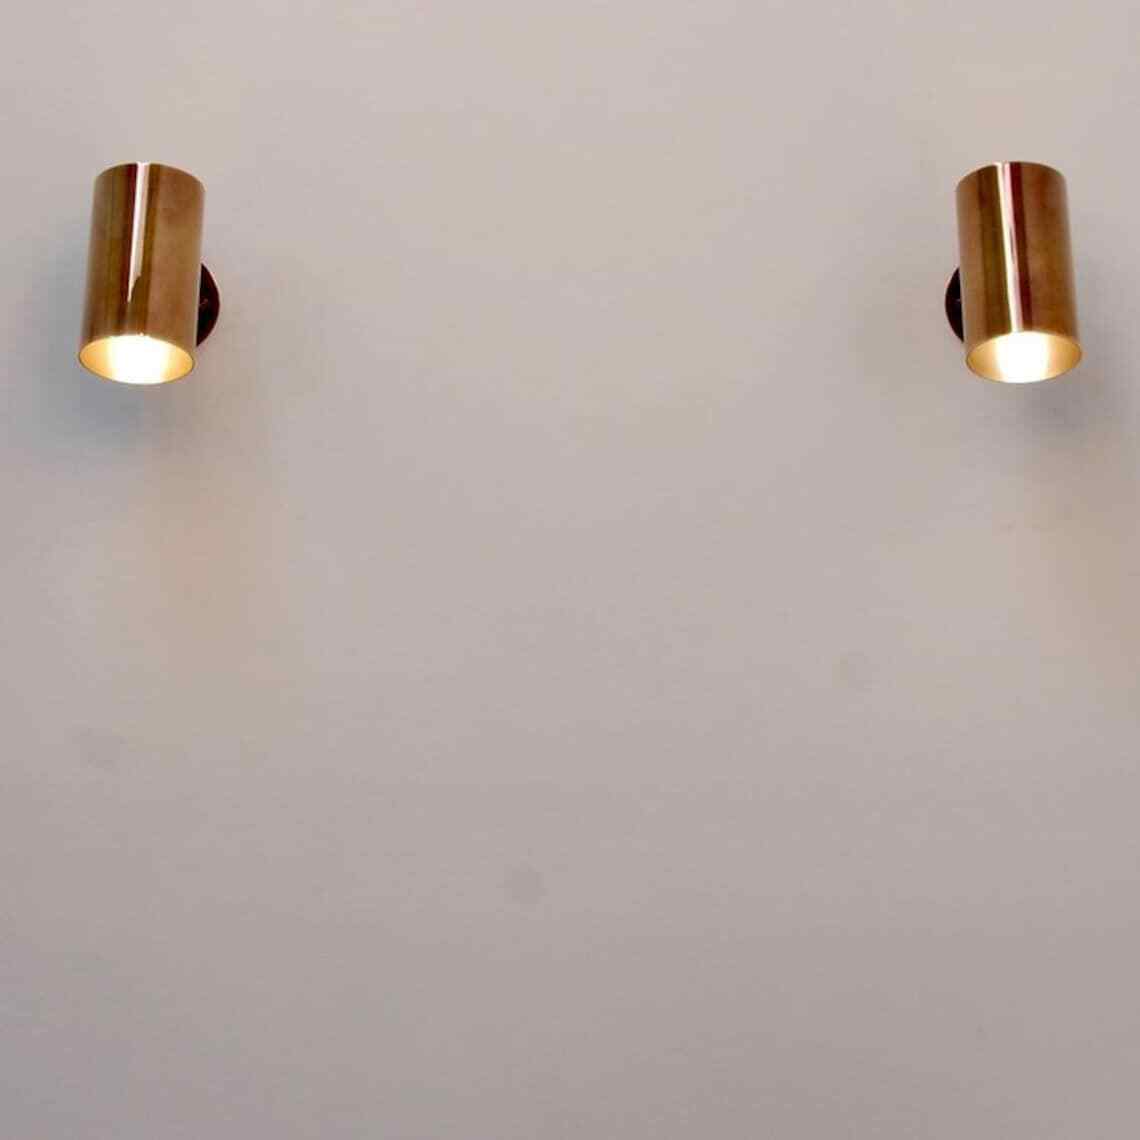 Italian Stilnovo Brass Cylinder Wall Sconce - Mid Century Modern Vanity Lamp